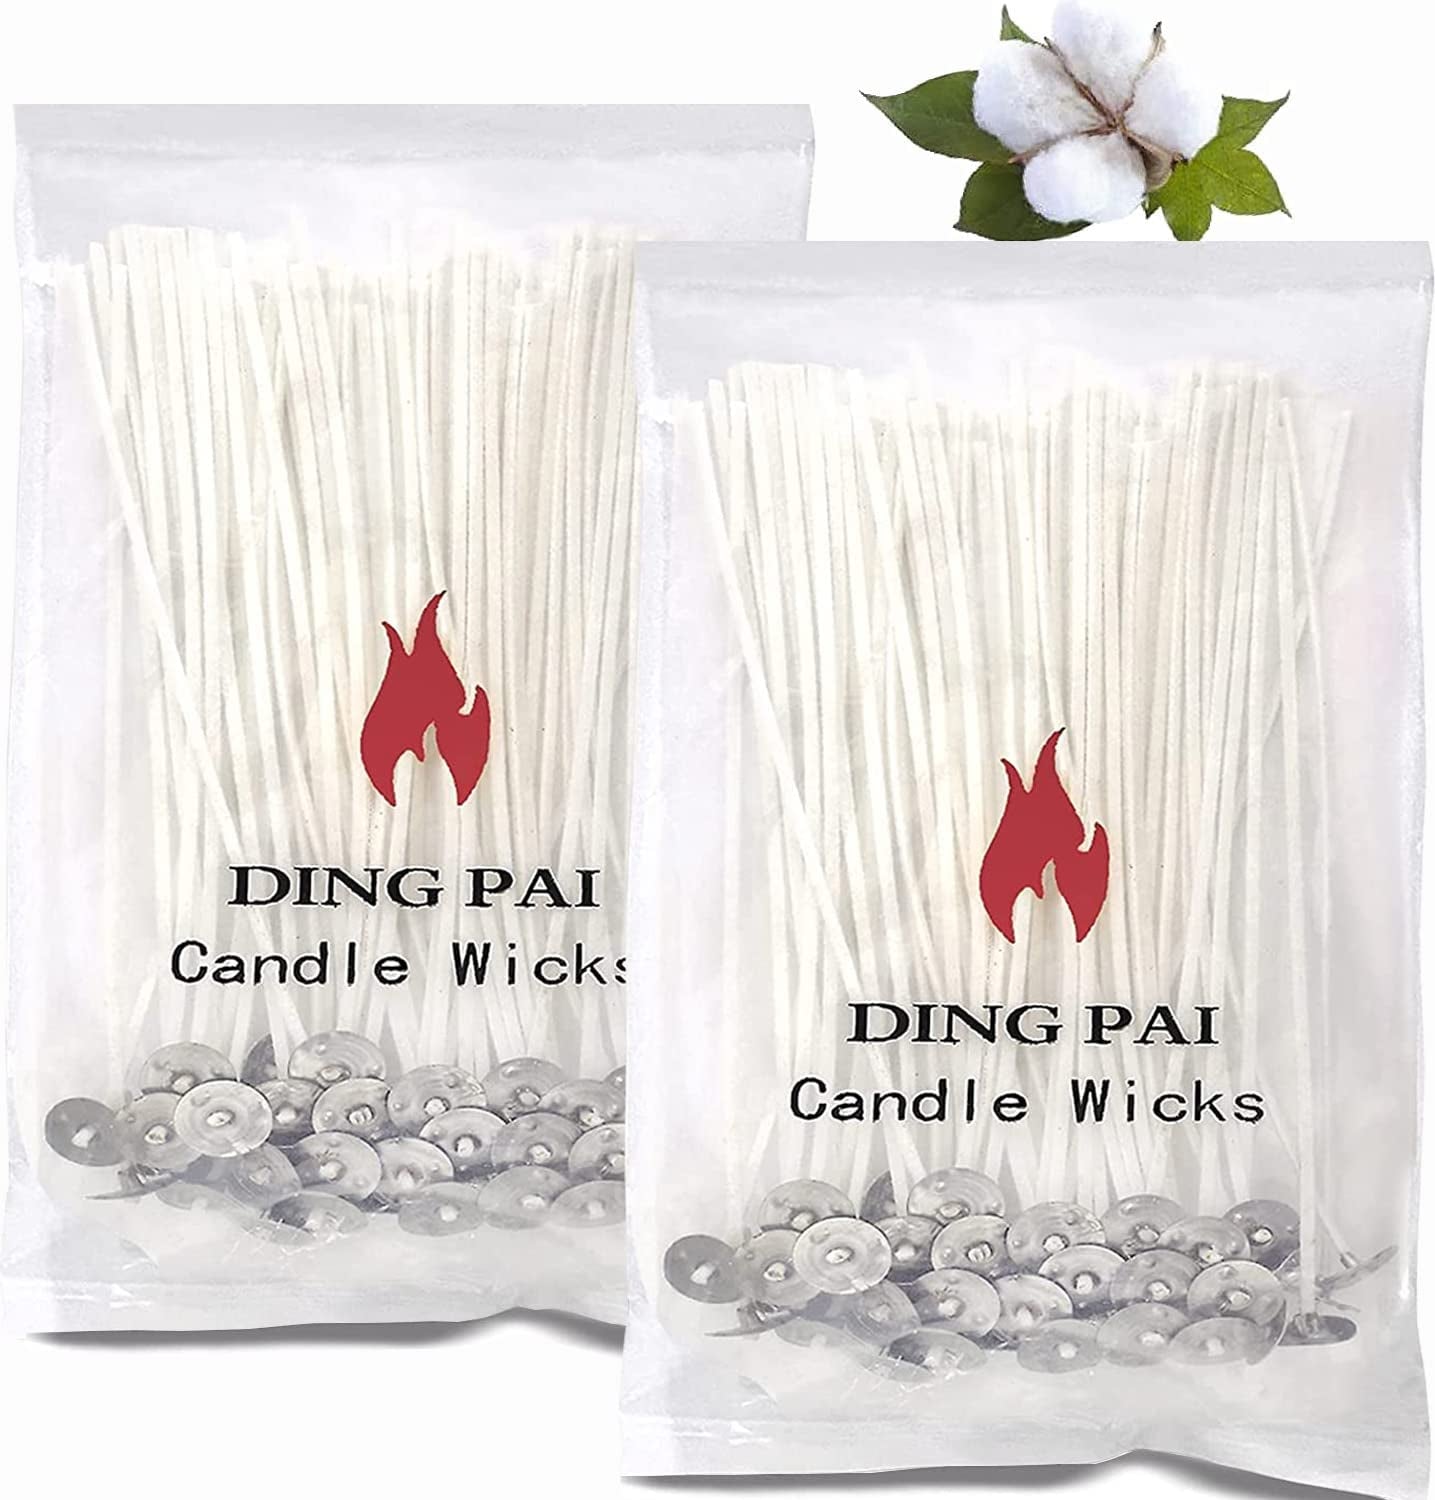 100Pcs Cotton Candle Wicks, 6 Inches Low Smoke Pre-Waxed Candle Wicks for Candle Making, Candle DIY